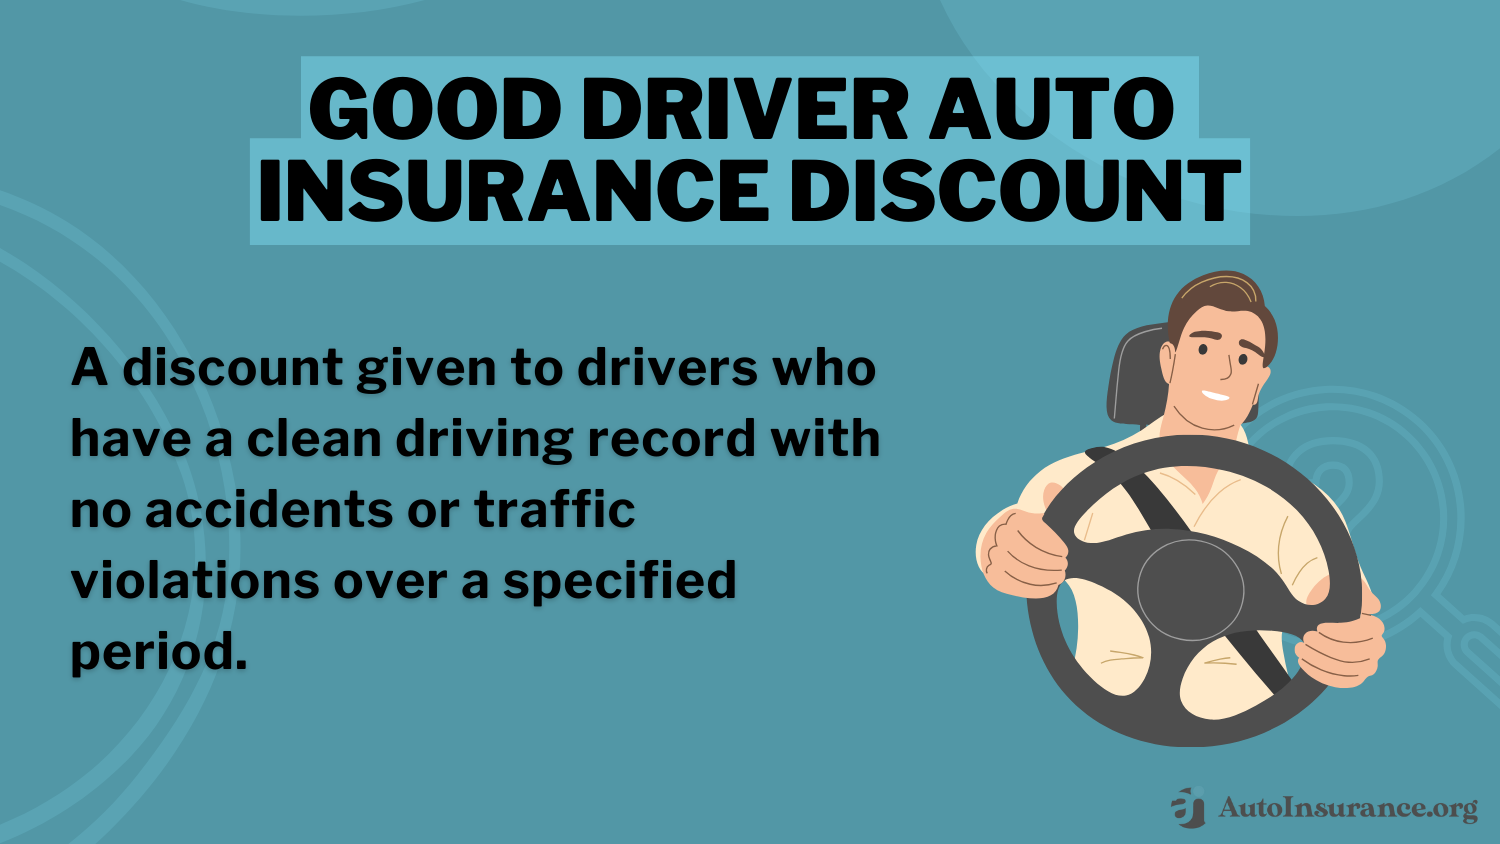 Best Dodge Journey Auto Insurance Good Driver Auto Insurance Discount Definition Card